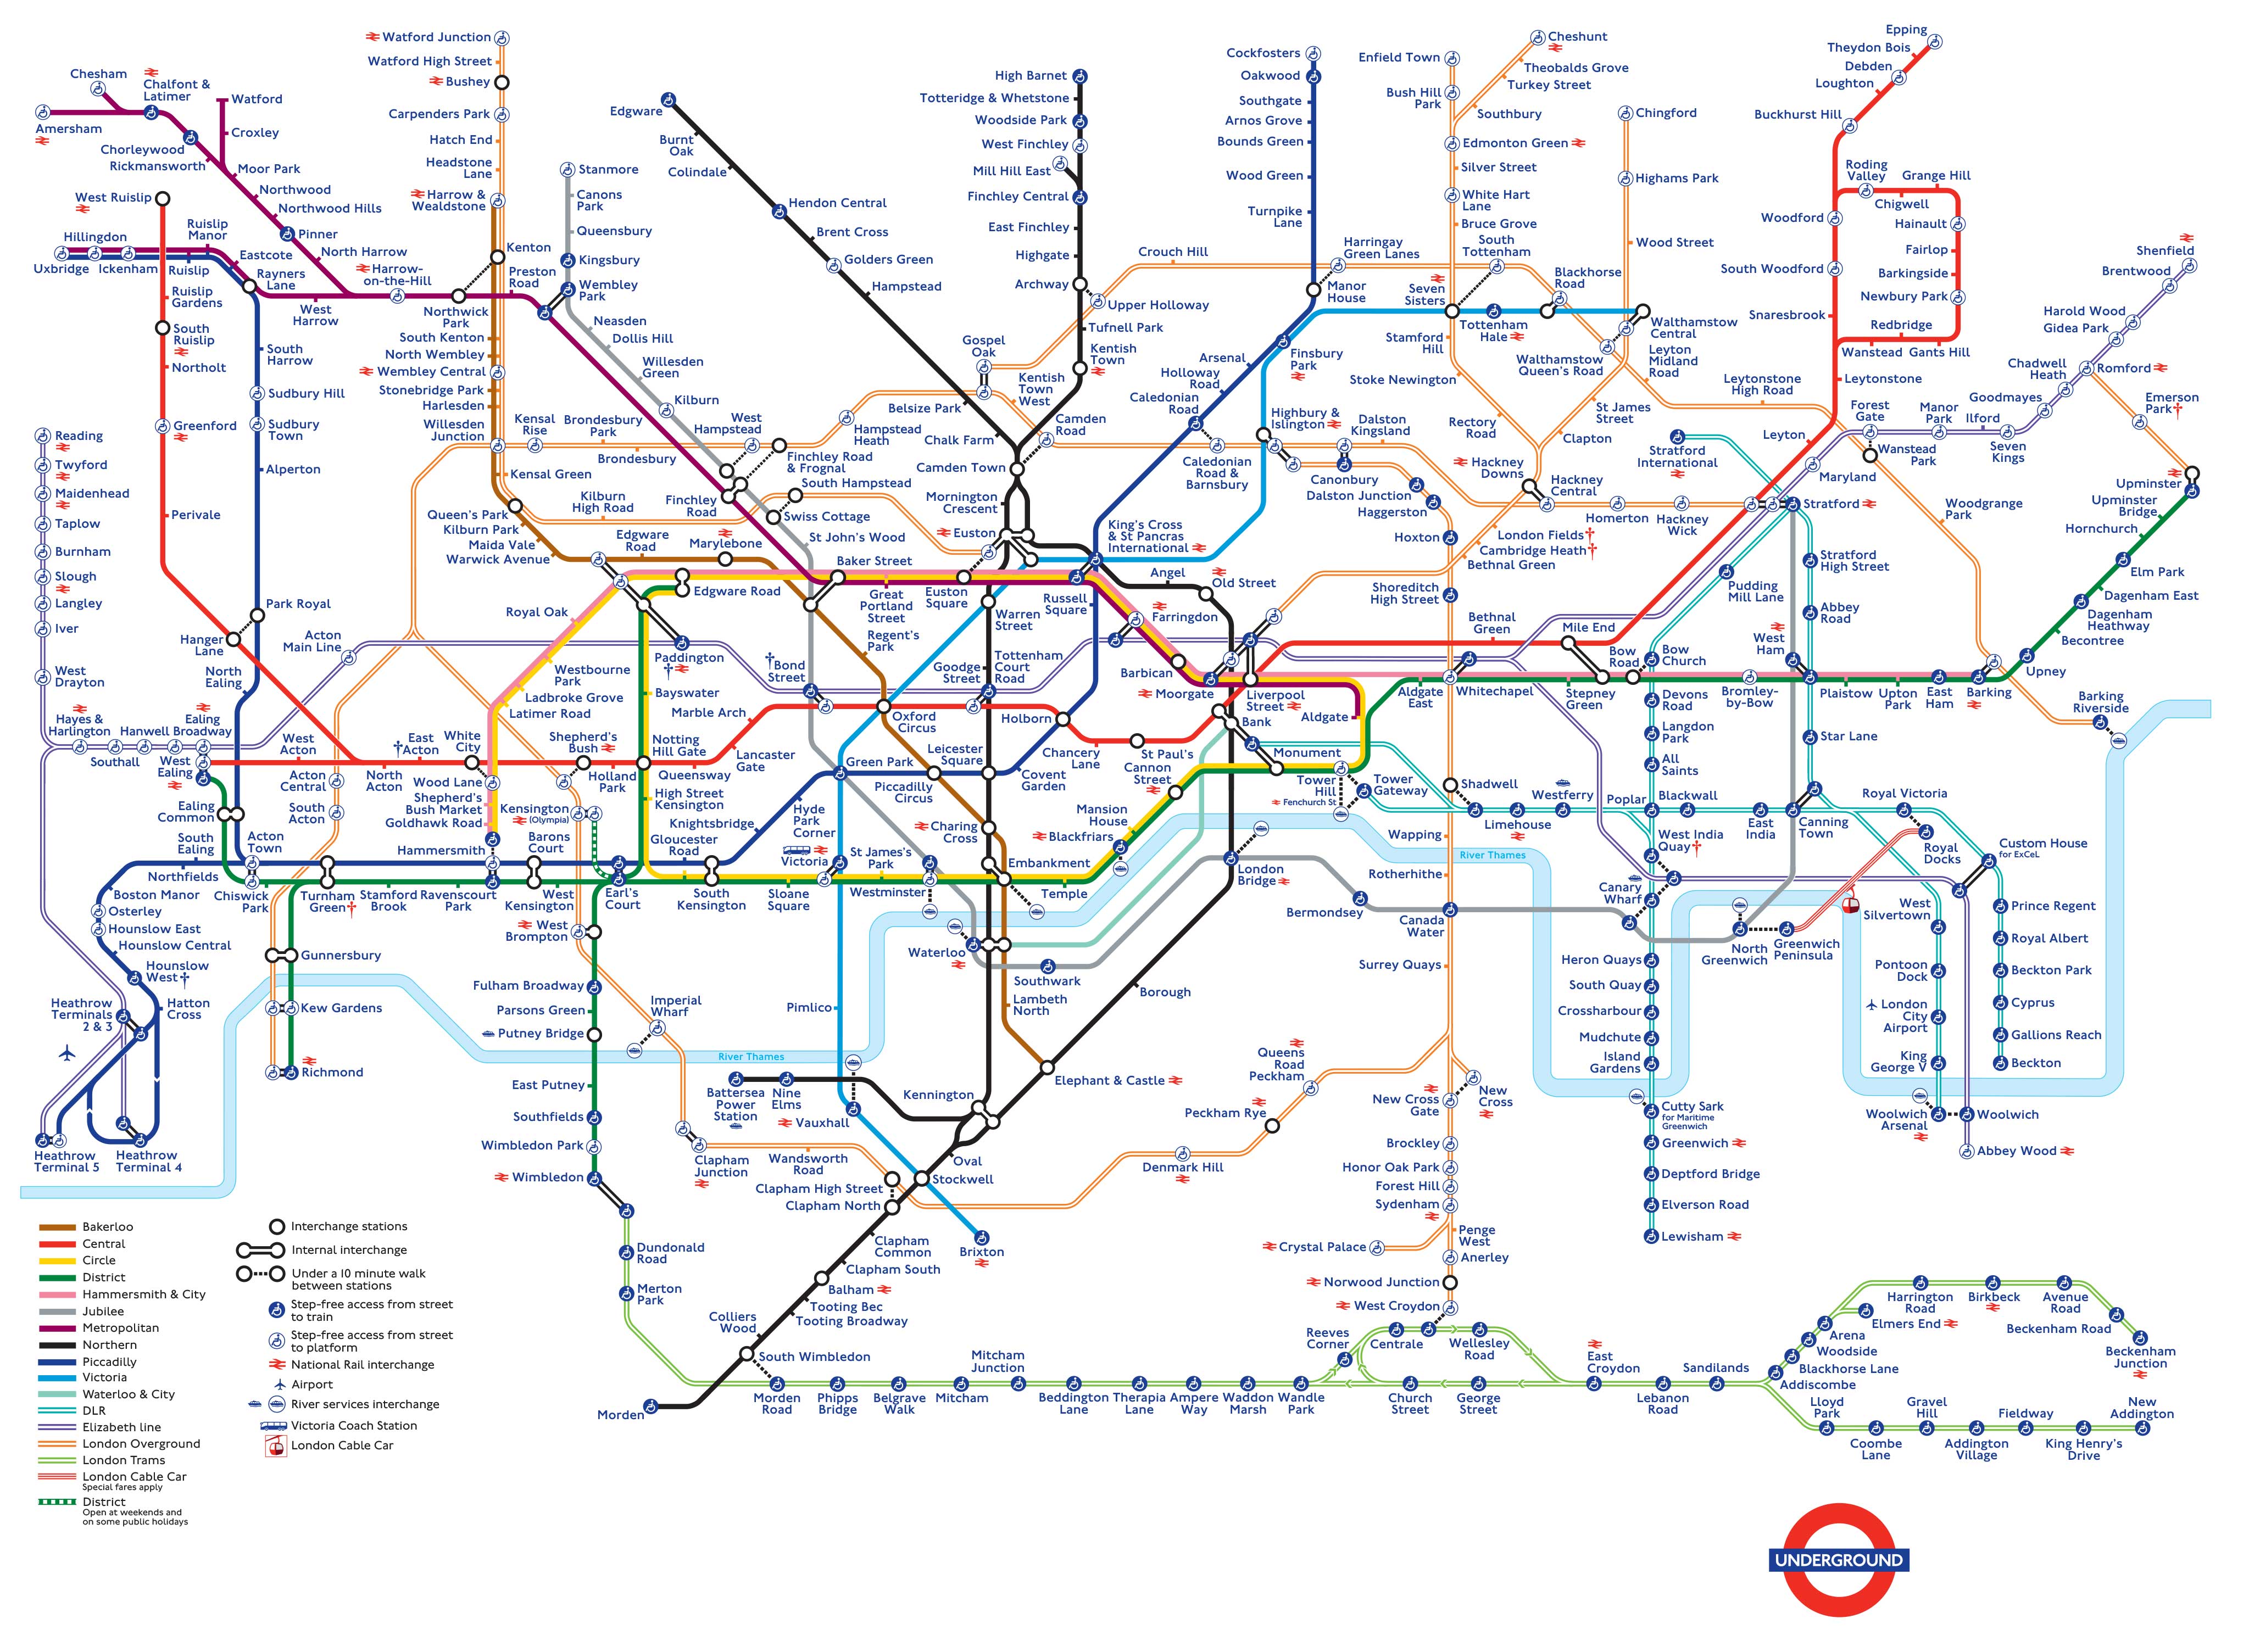 full-colour-large-print-london-undergrund-tube-map-poster-brand-new